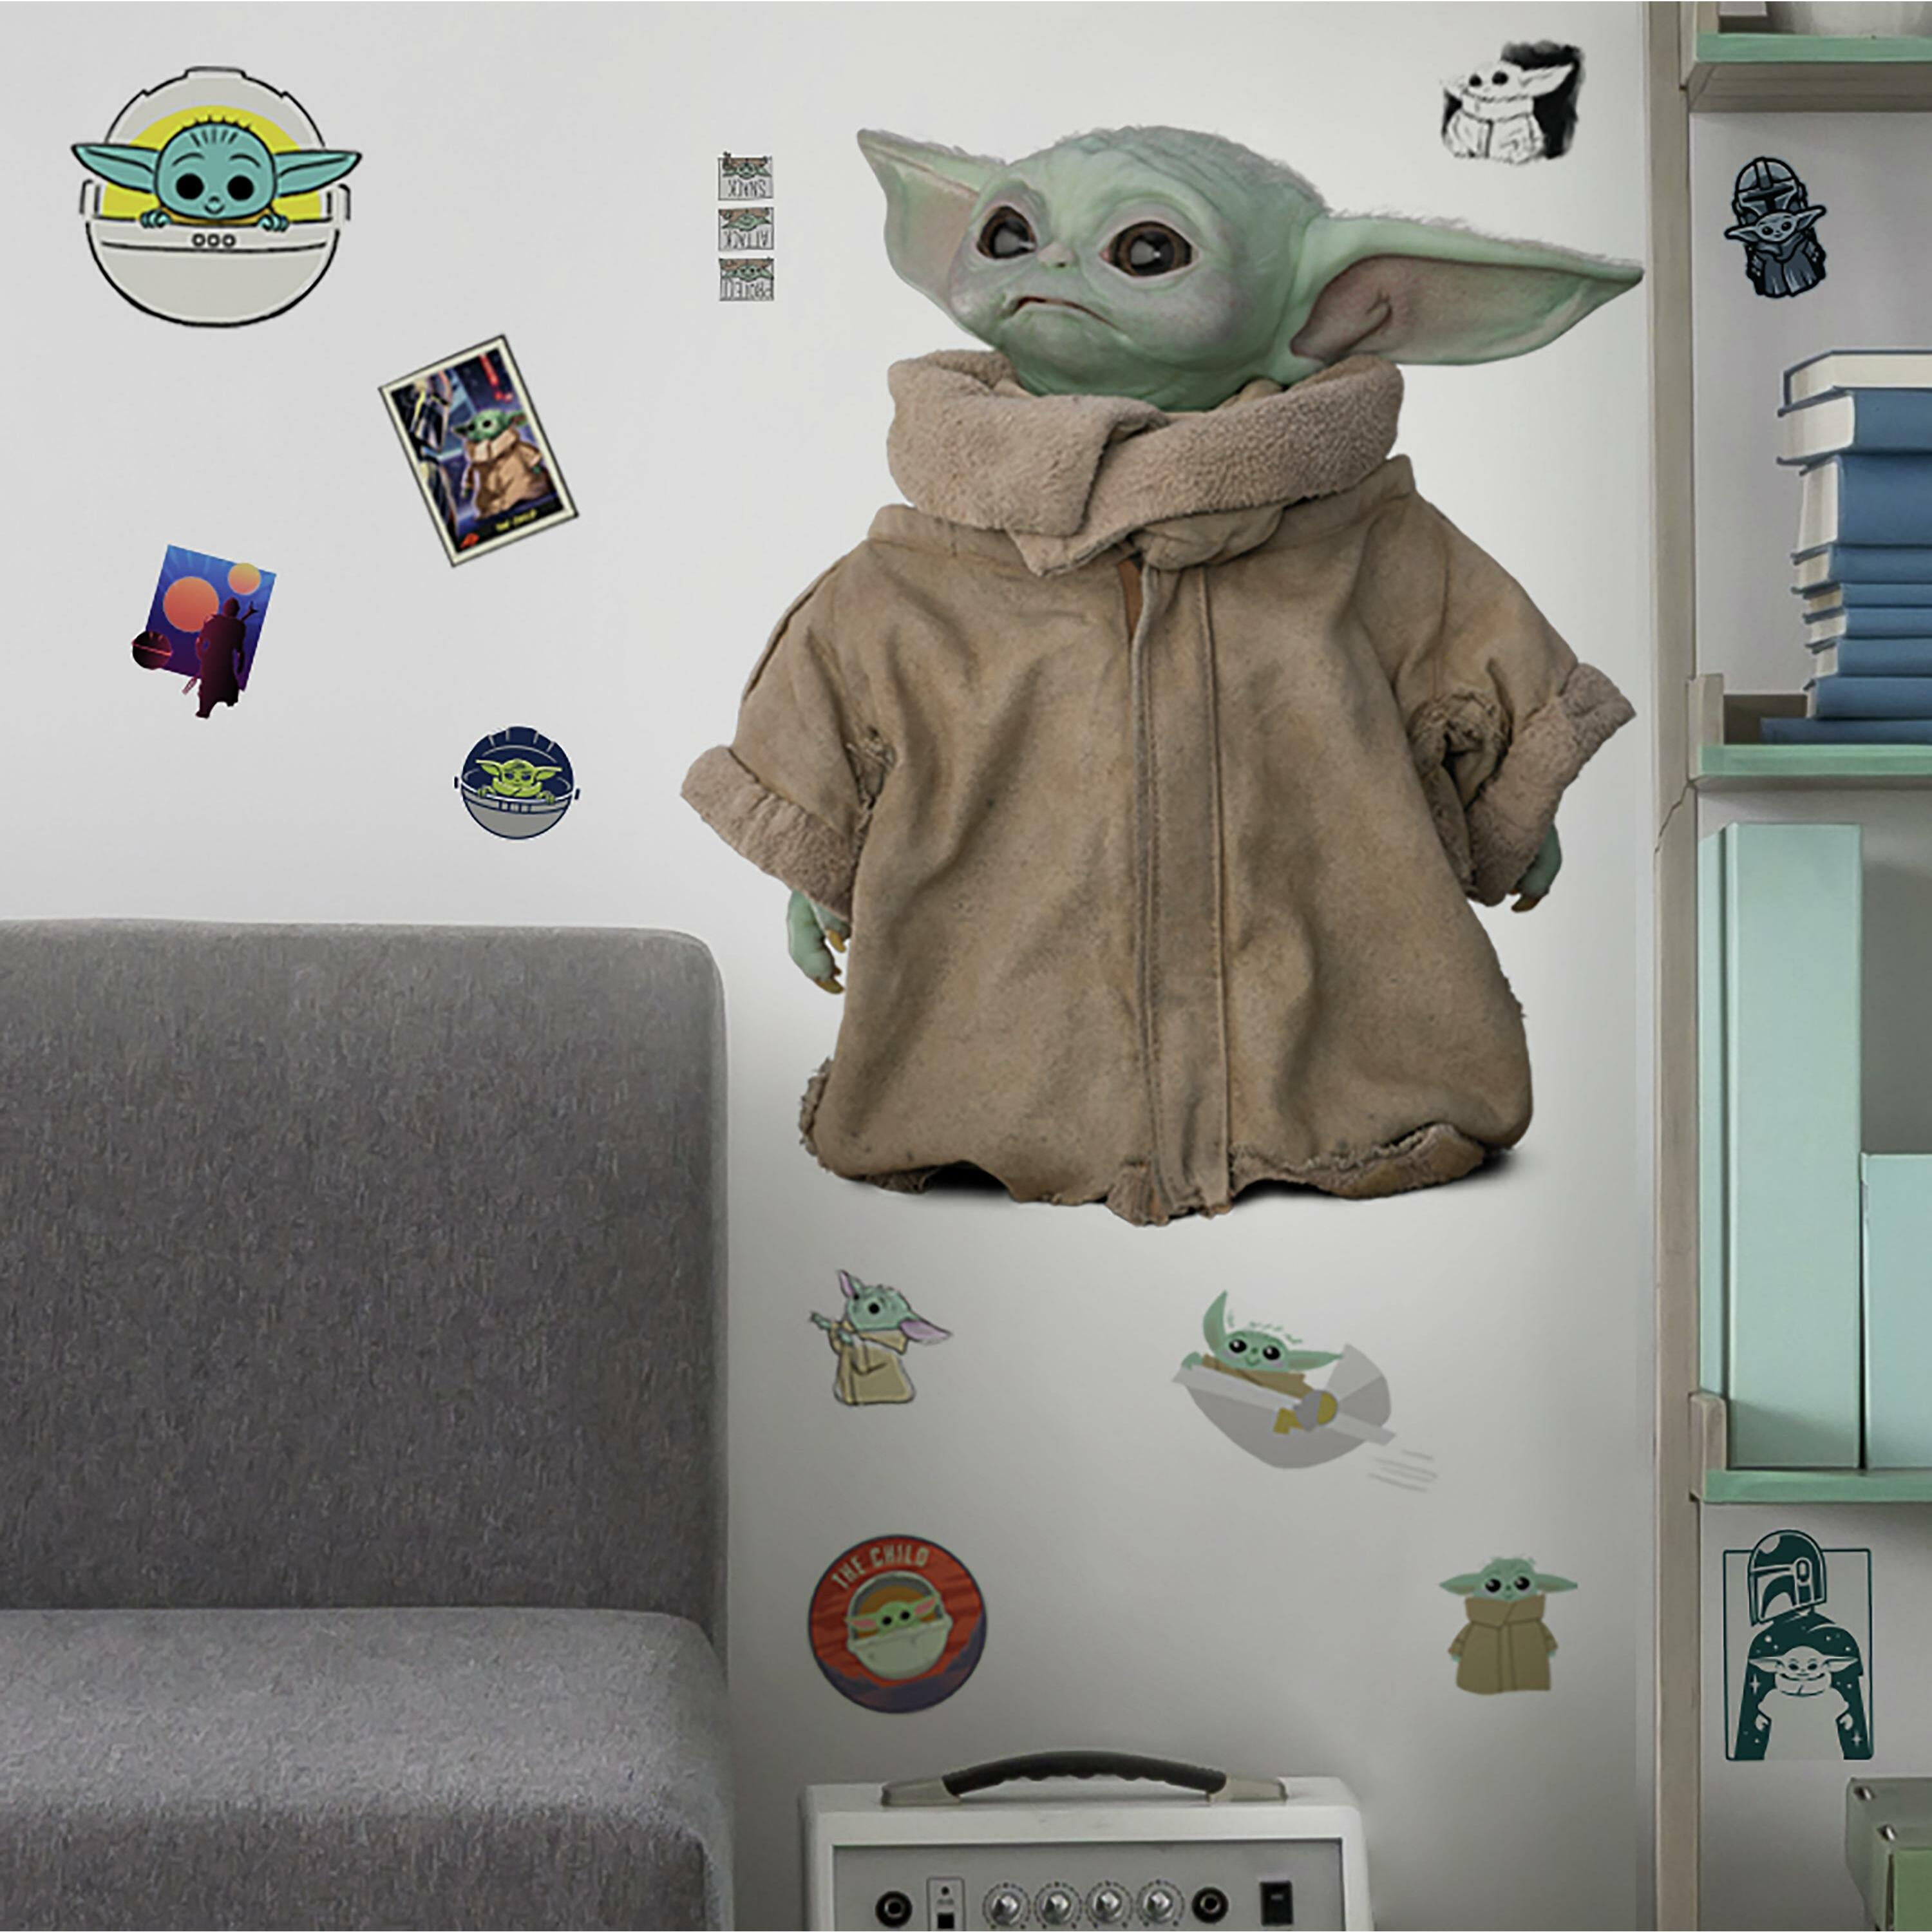 Baby Yoda The Mandalorian PERSONALISED NAME Decal WALL STICKER Decor Kids WP284 